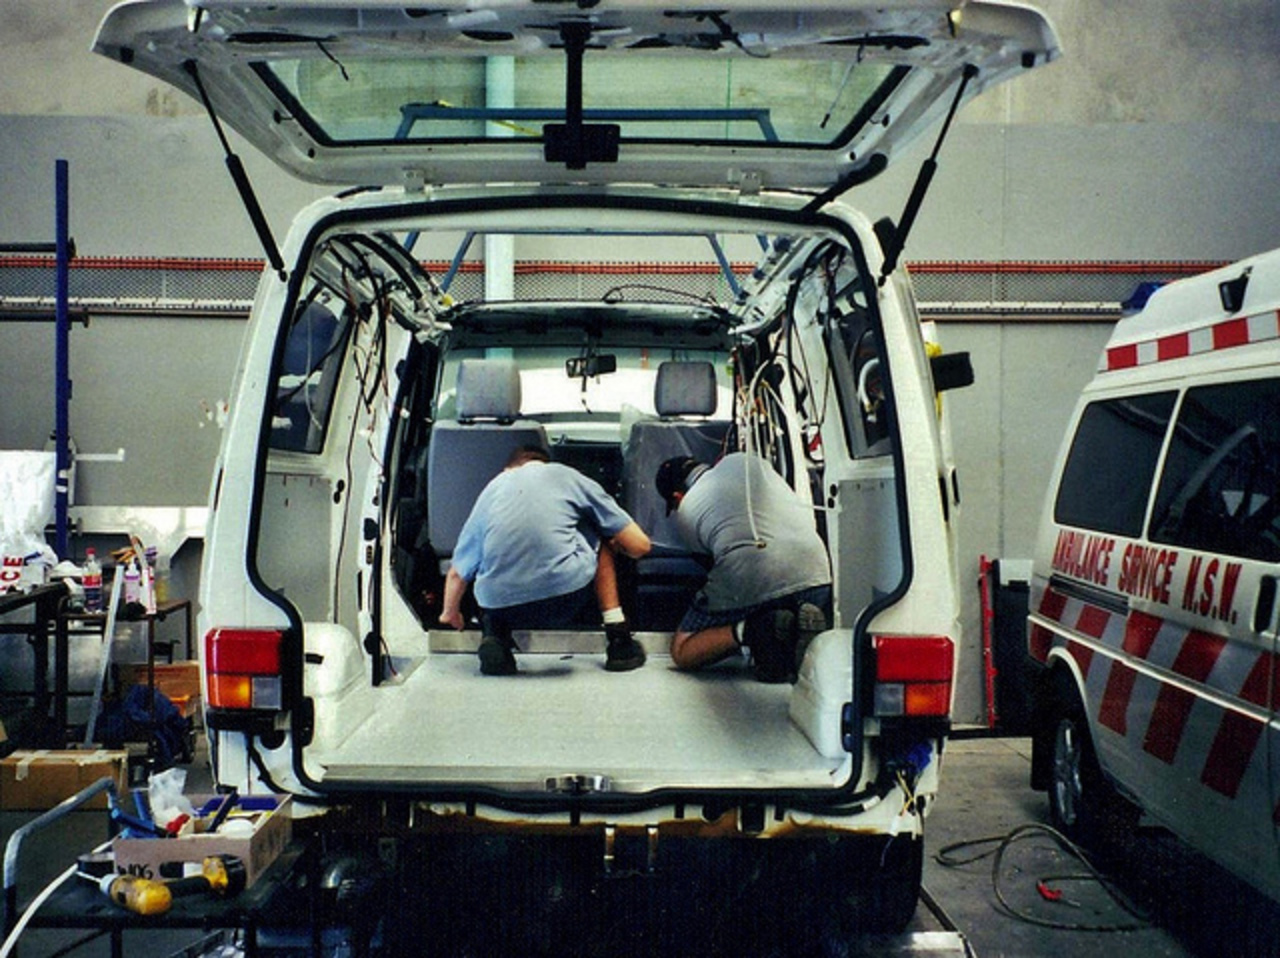 2002 Volkswagen T4 Transporter TDi ambulance | Flickr - Photo Sharing!